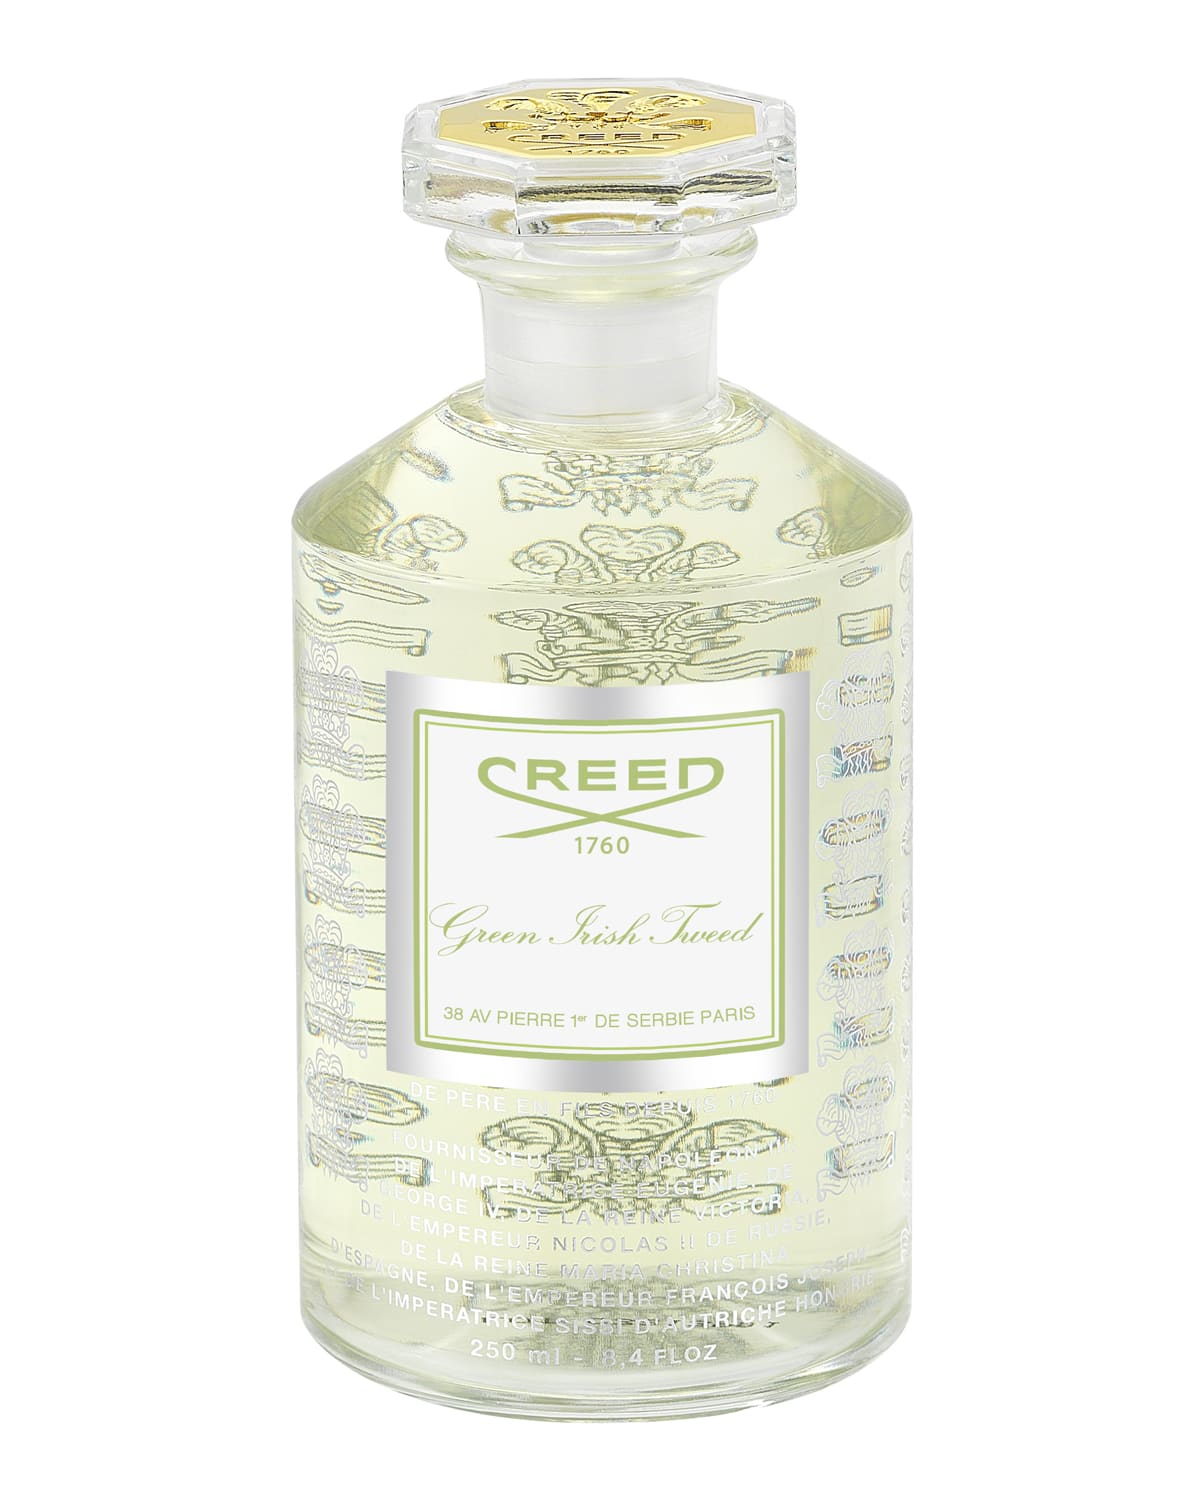 Creed Green Irish Tweed, 8.4 oz.